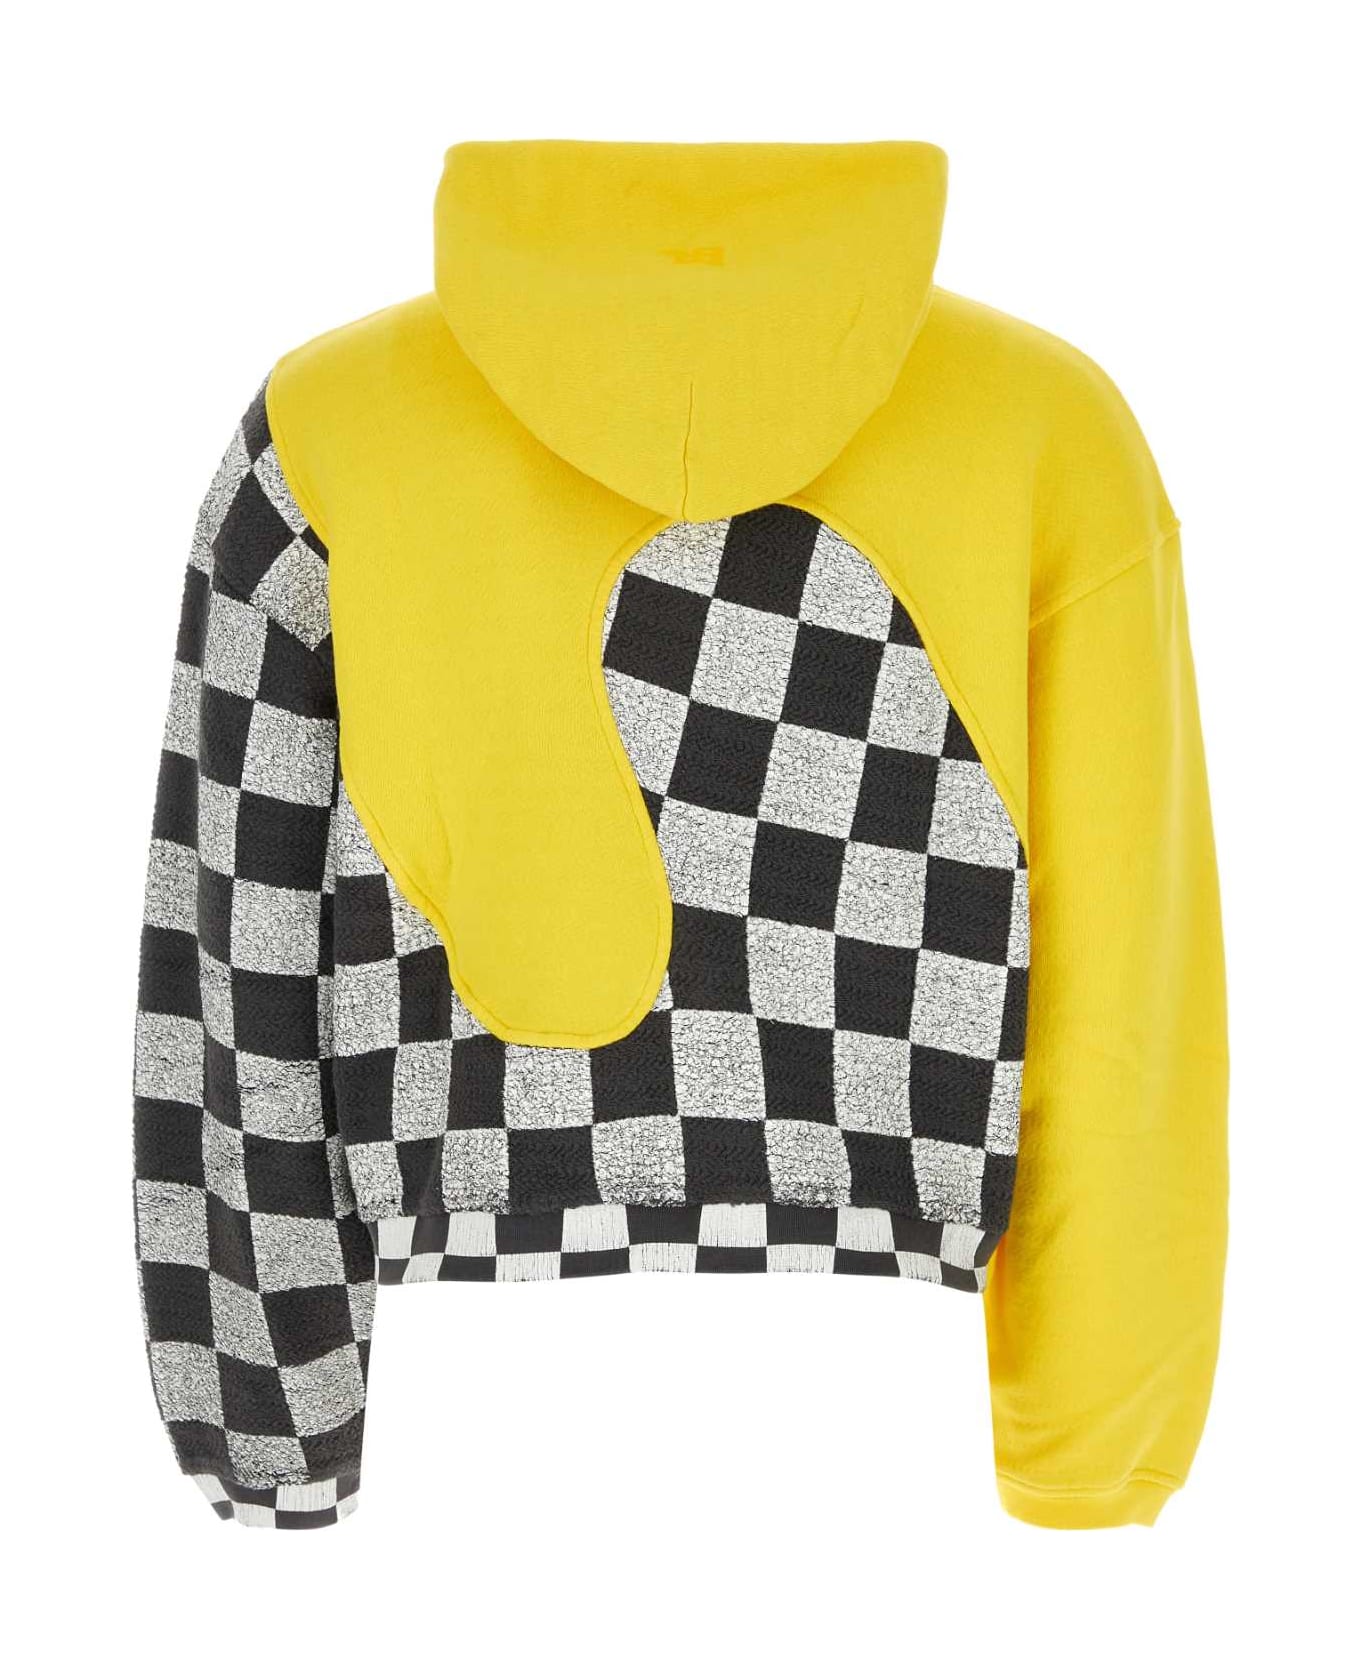 ERL Multicolor Cotton Sweatshirt - YELLOW